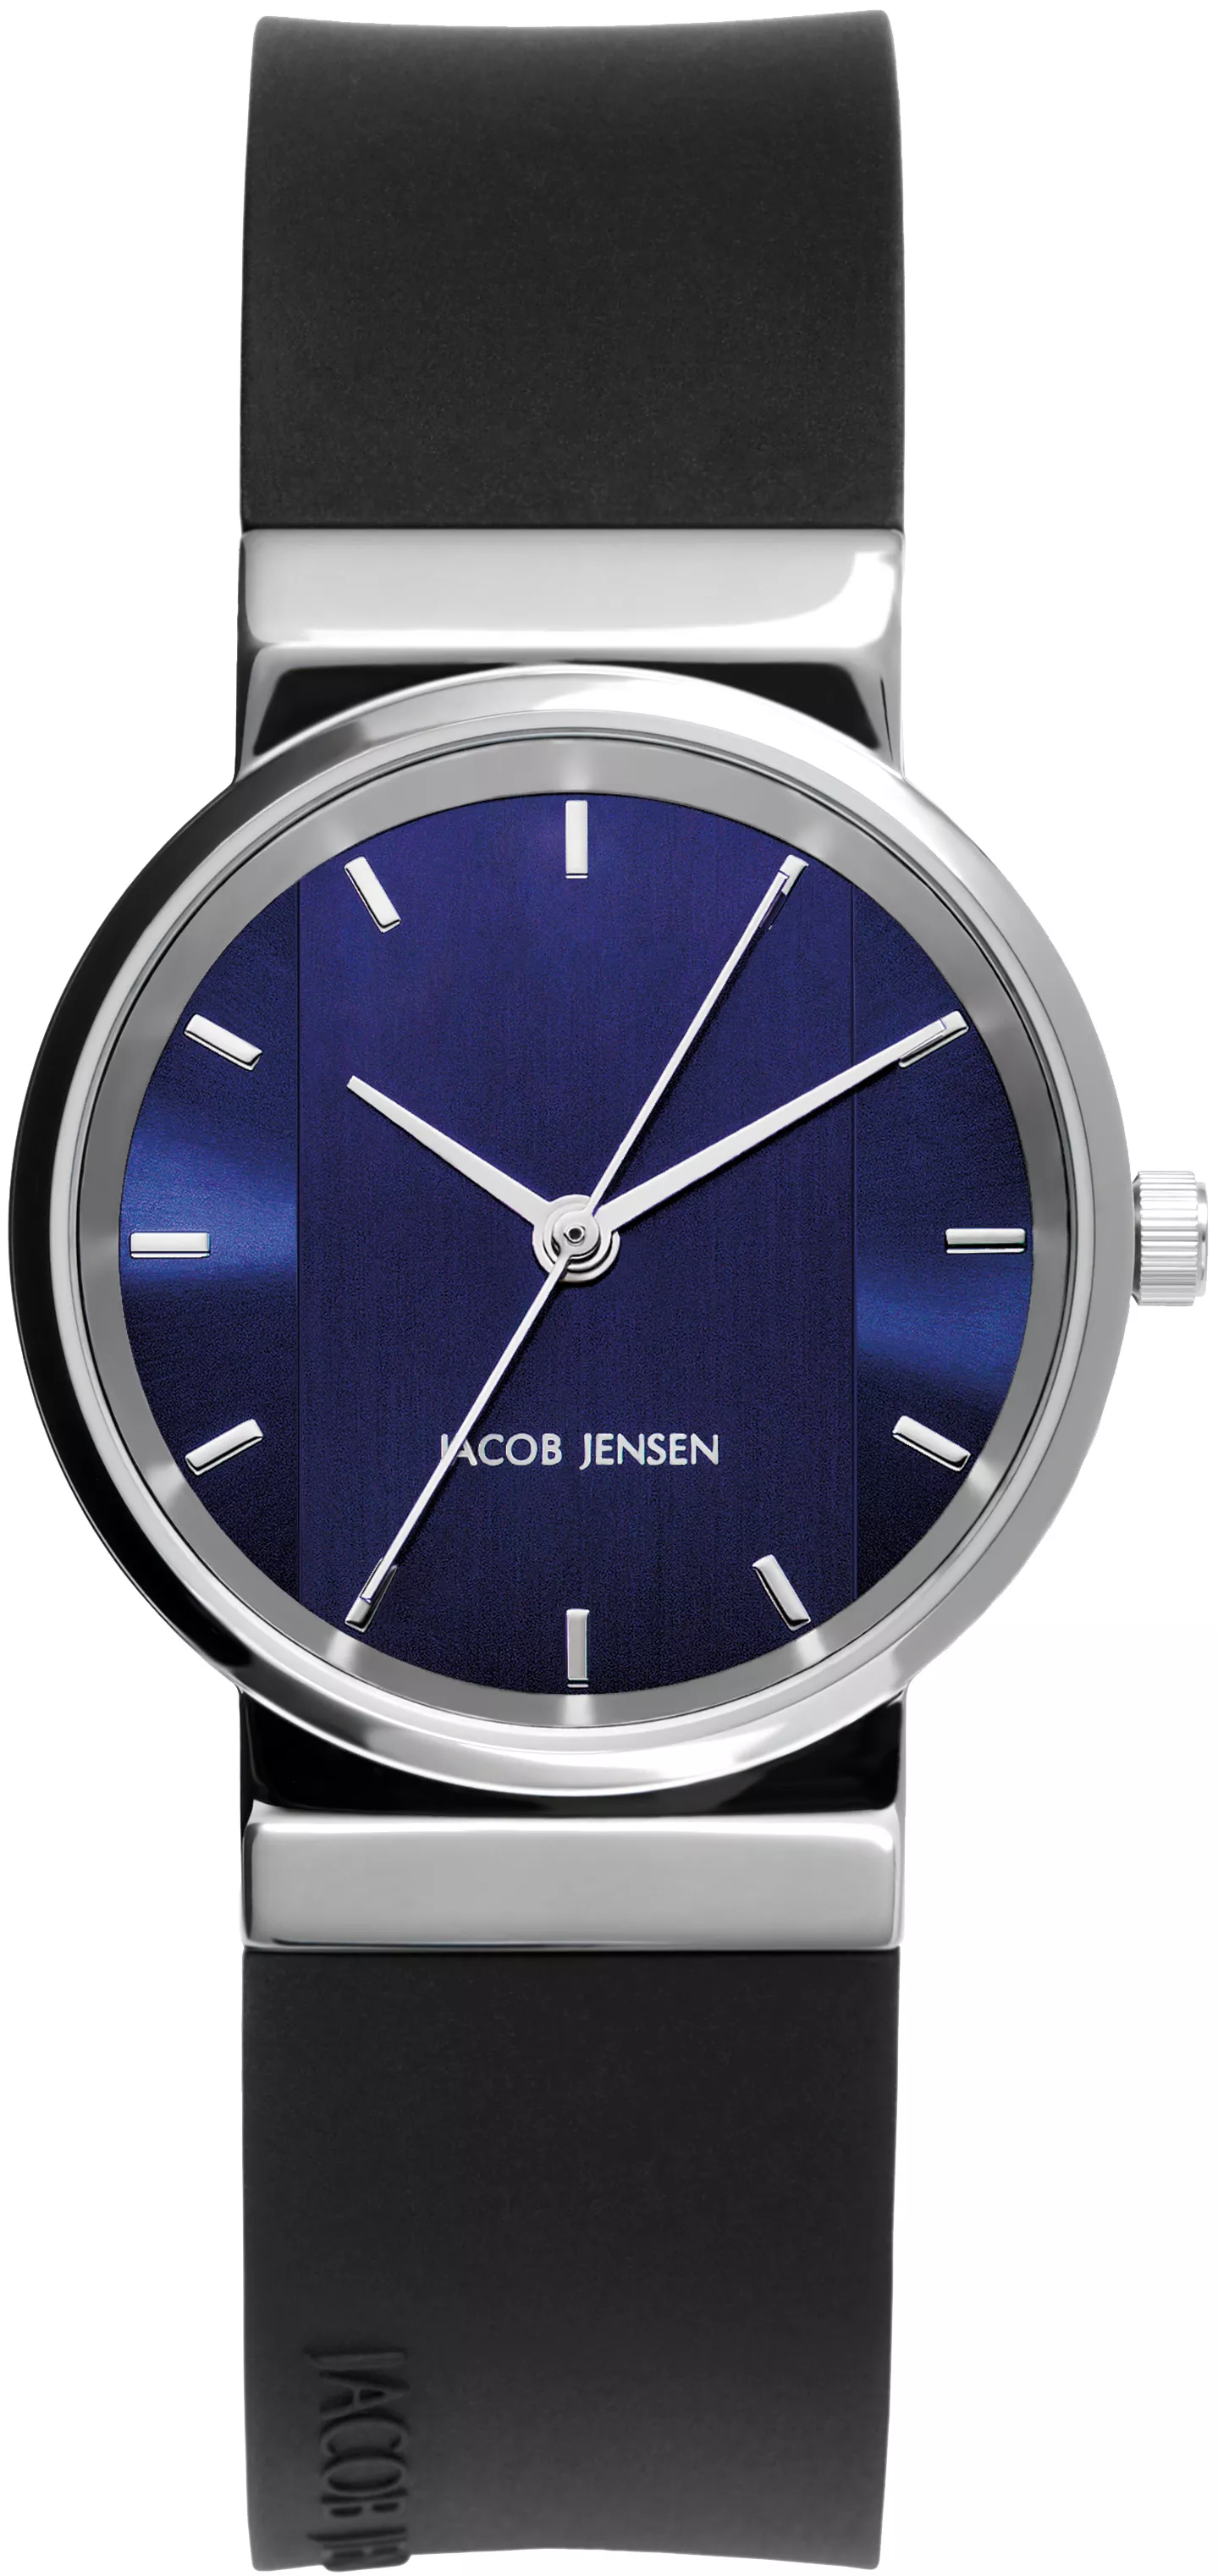 Jacob Jensen Horloge 29 mm Stainless Steel 749